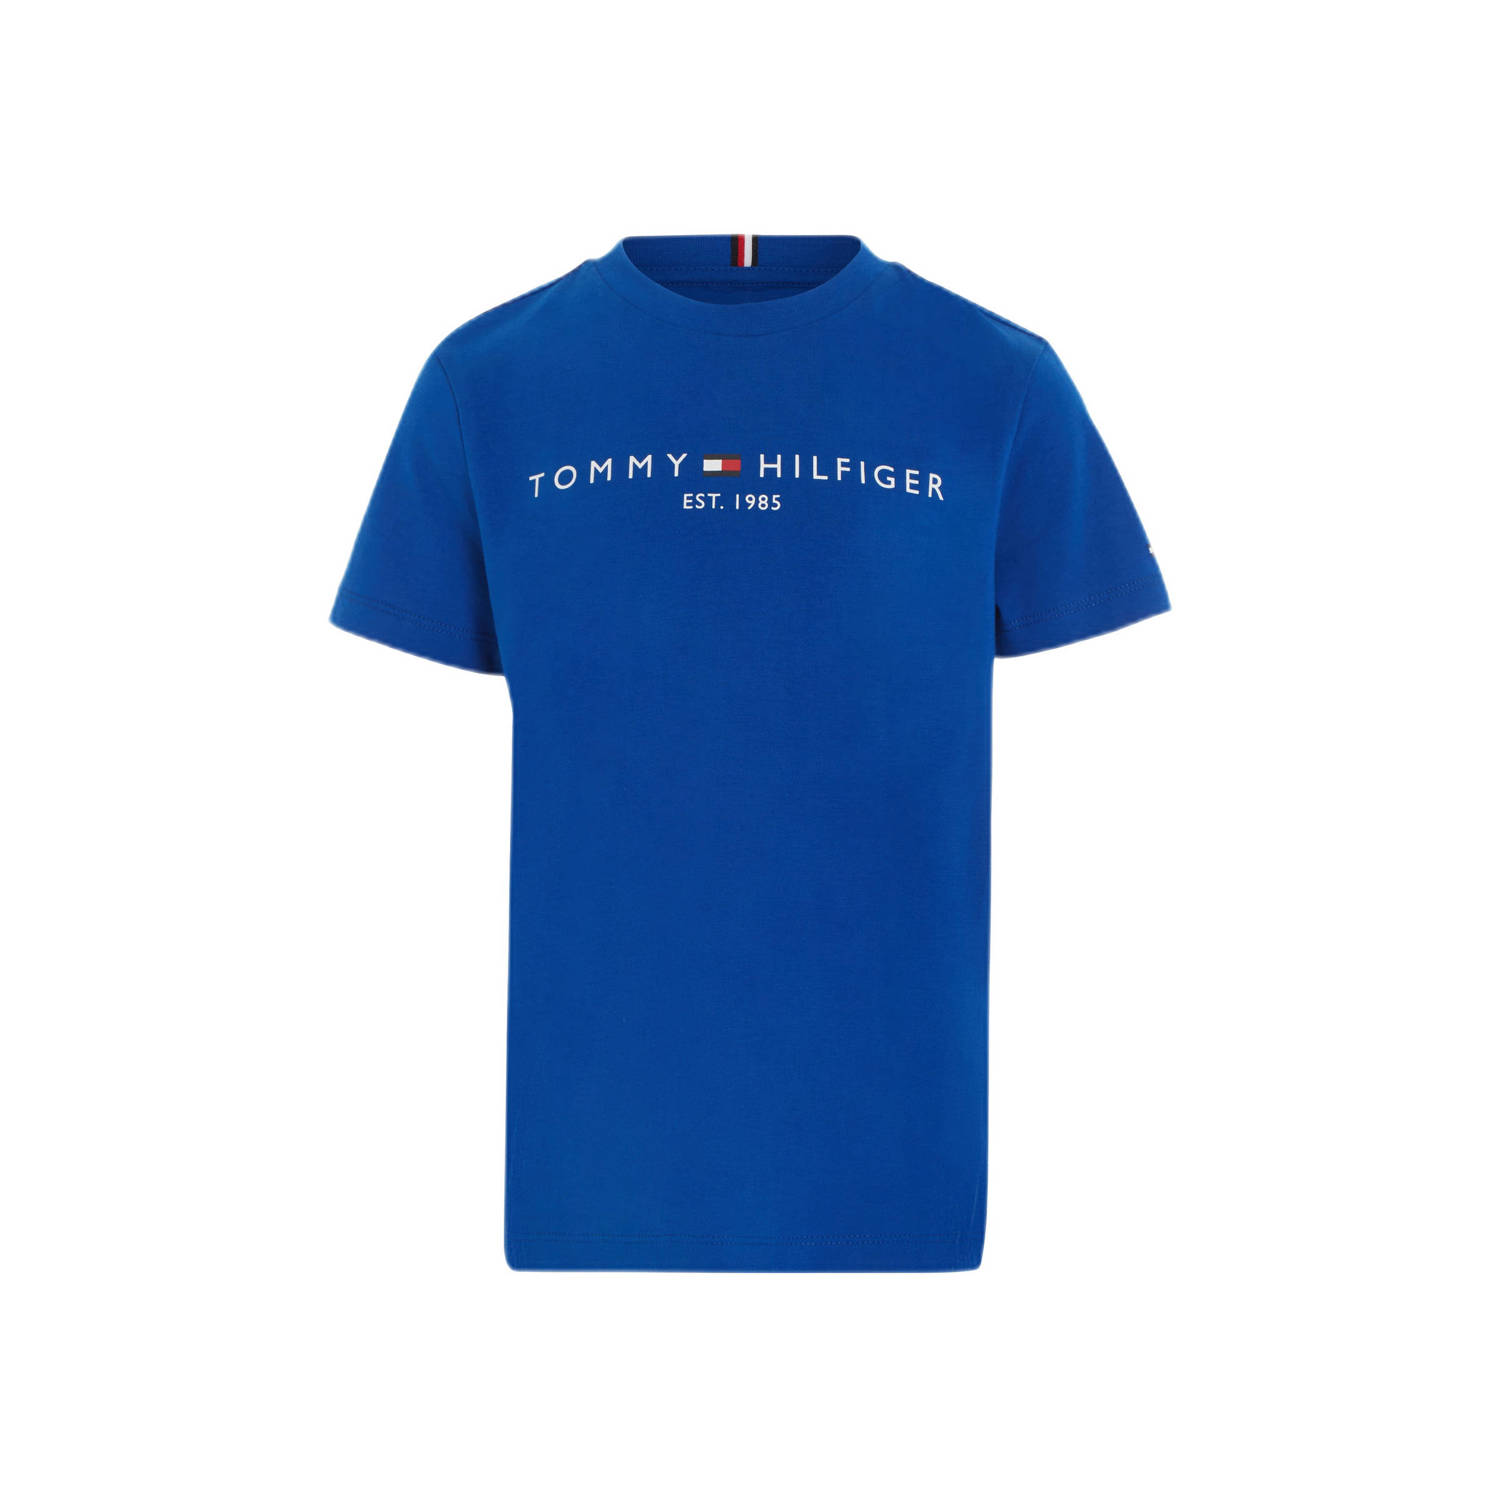 Tommy Hilfiger T-shirt met tekst felblauw Katoen Ronde hals 104